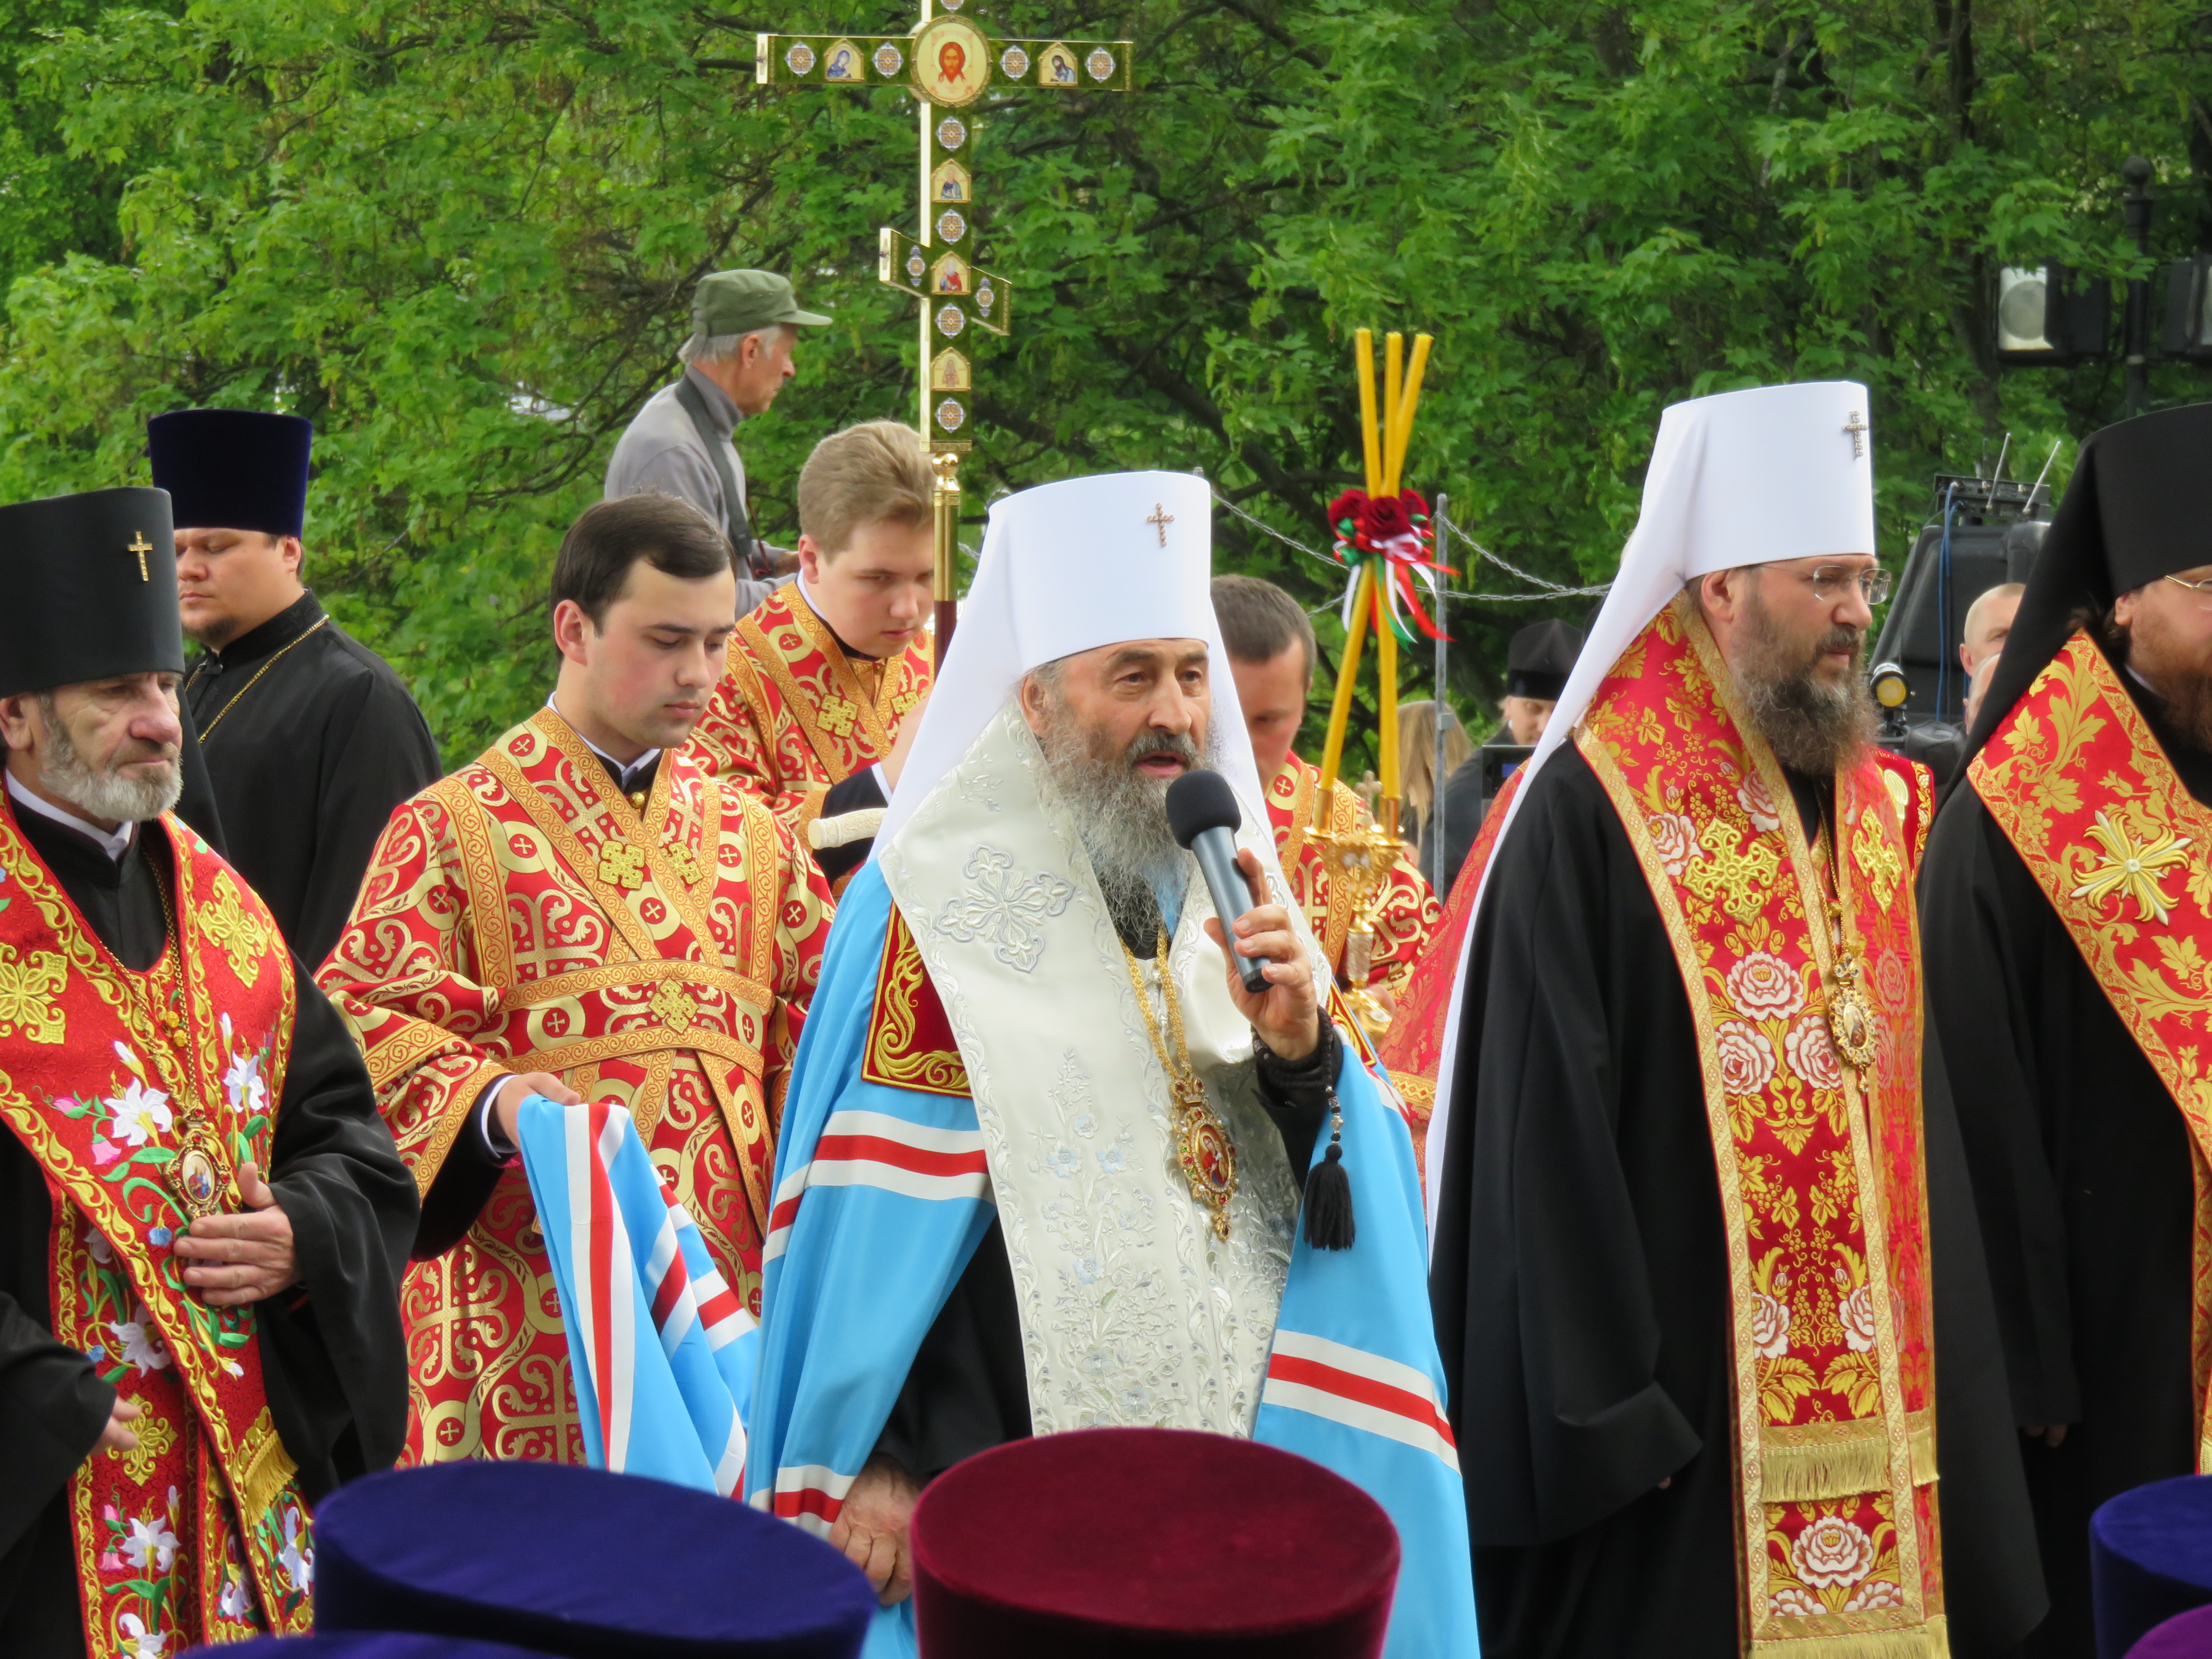 Metropolitan Onufriy of the Ukrainian Orthodox Church in 2016.